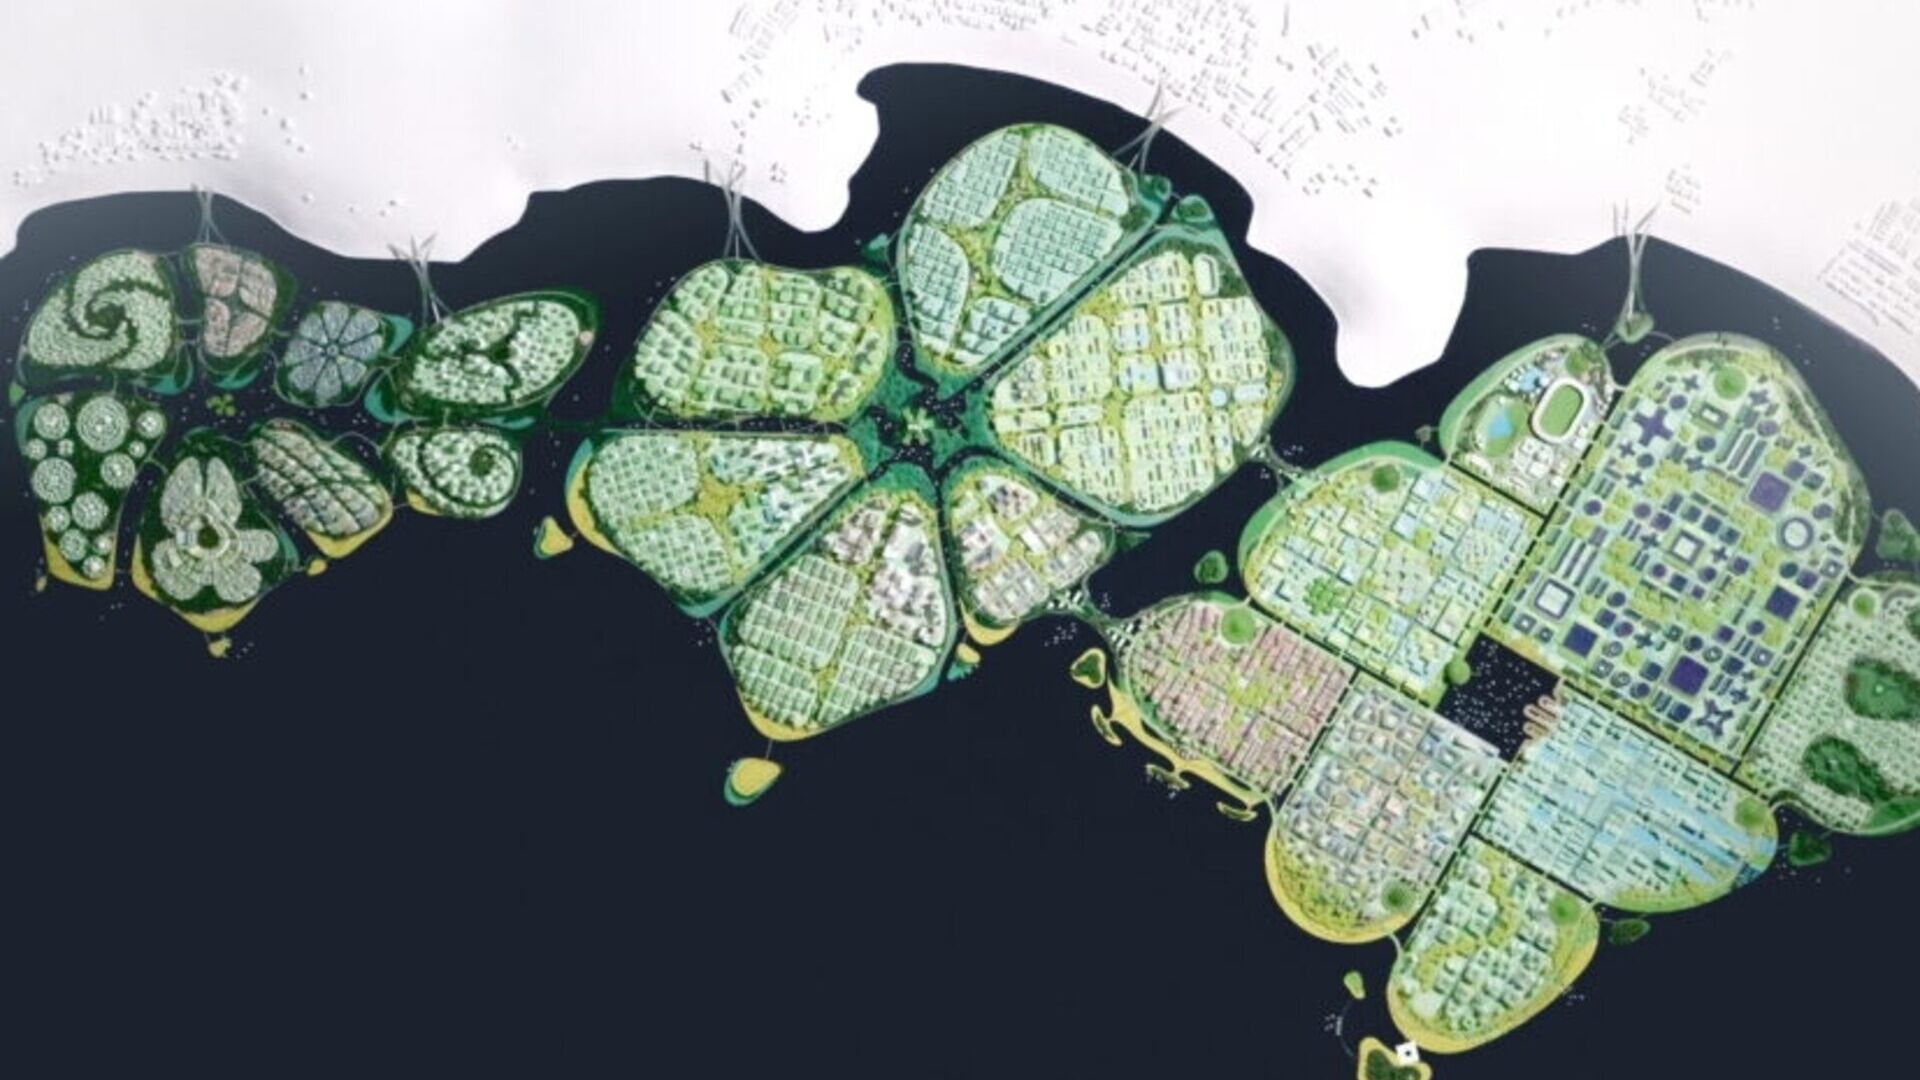 BiodiverCity: სამი კუნძულის, არხების, მანგროსა და ლაგუნის საჰაერო რენდერი, რომელიც შექმნის ინოვაციურ და მდგრად ქალაქ BiodiverCity-ს 2030 წელს მალაიზიაში პენანგთან ახლოს.